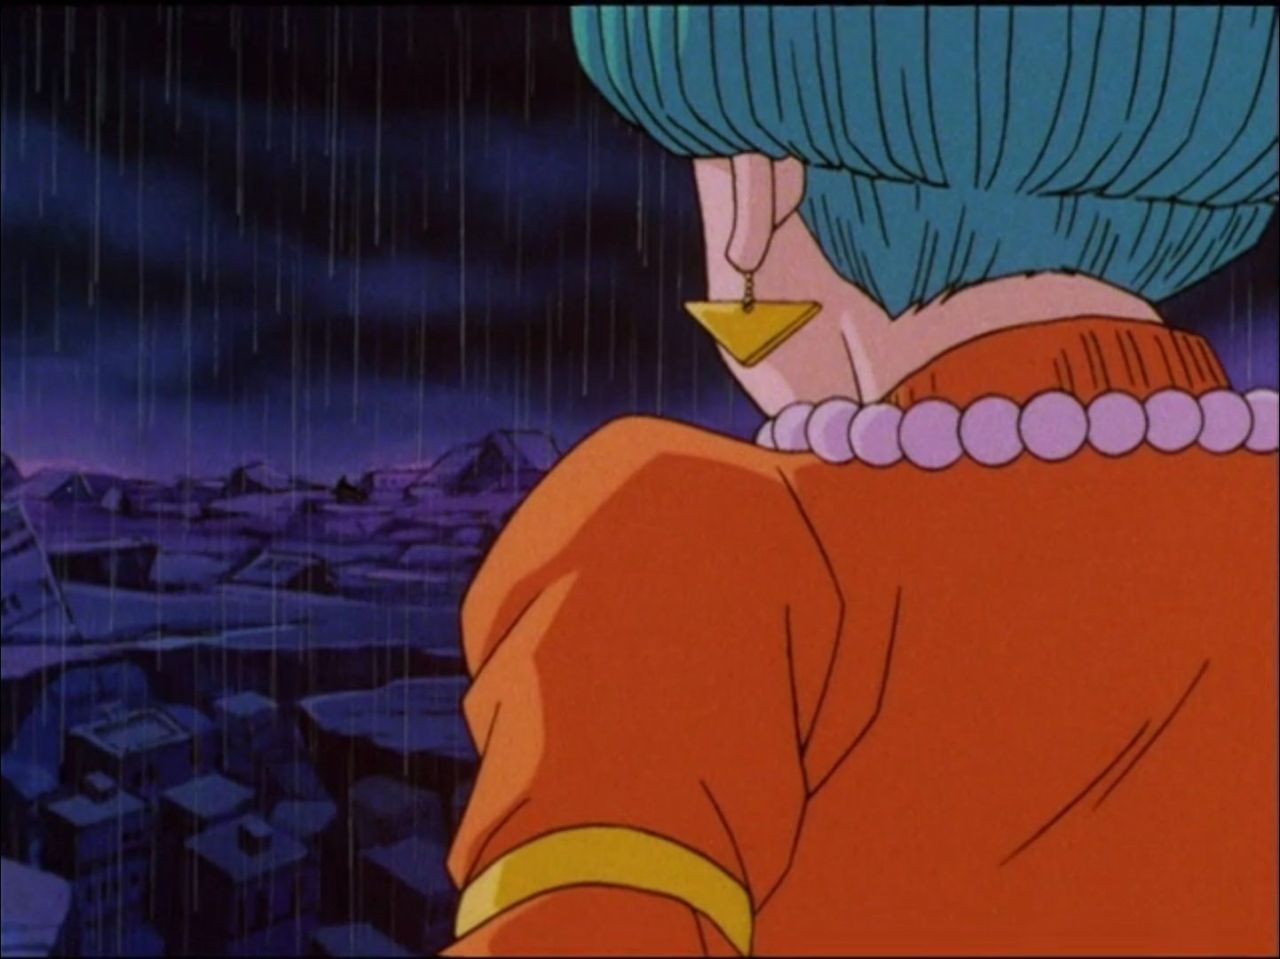 Dragon Ball GT Episode 37 Screenshot_001 by PrincessPuccadomiNyo